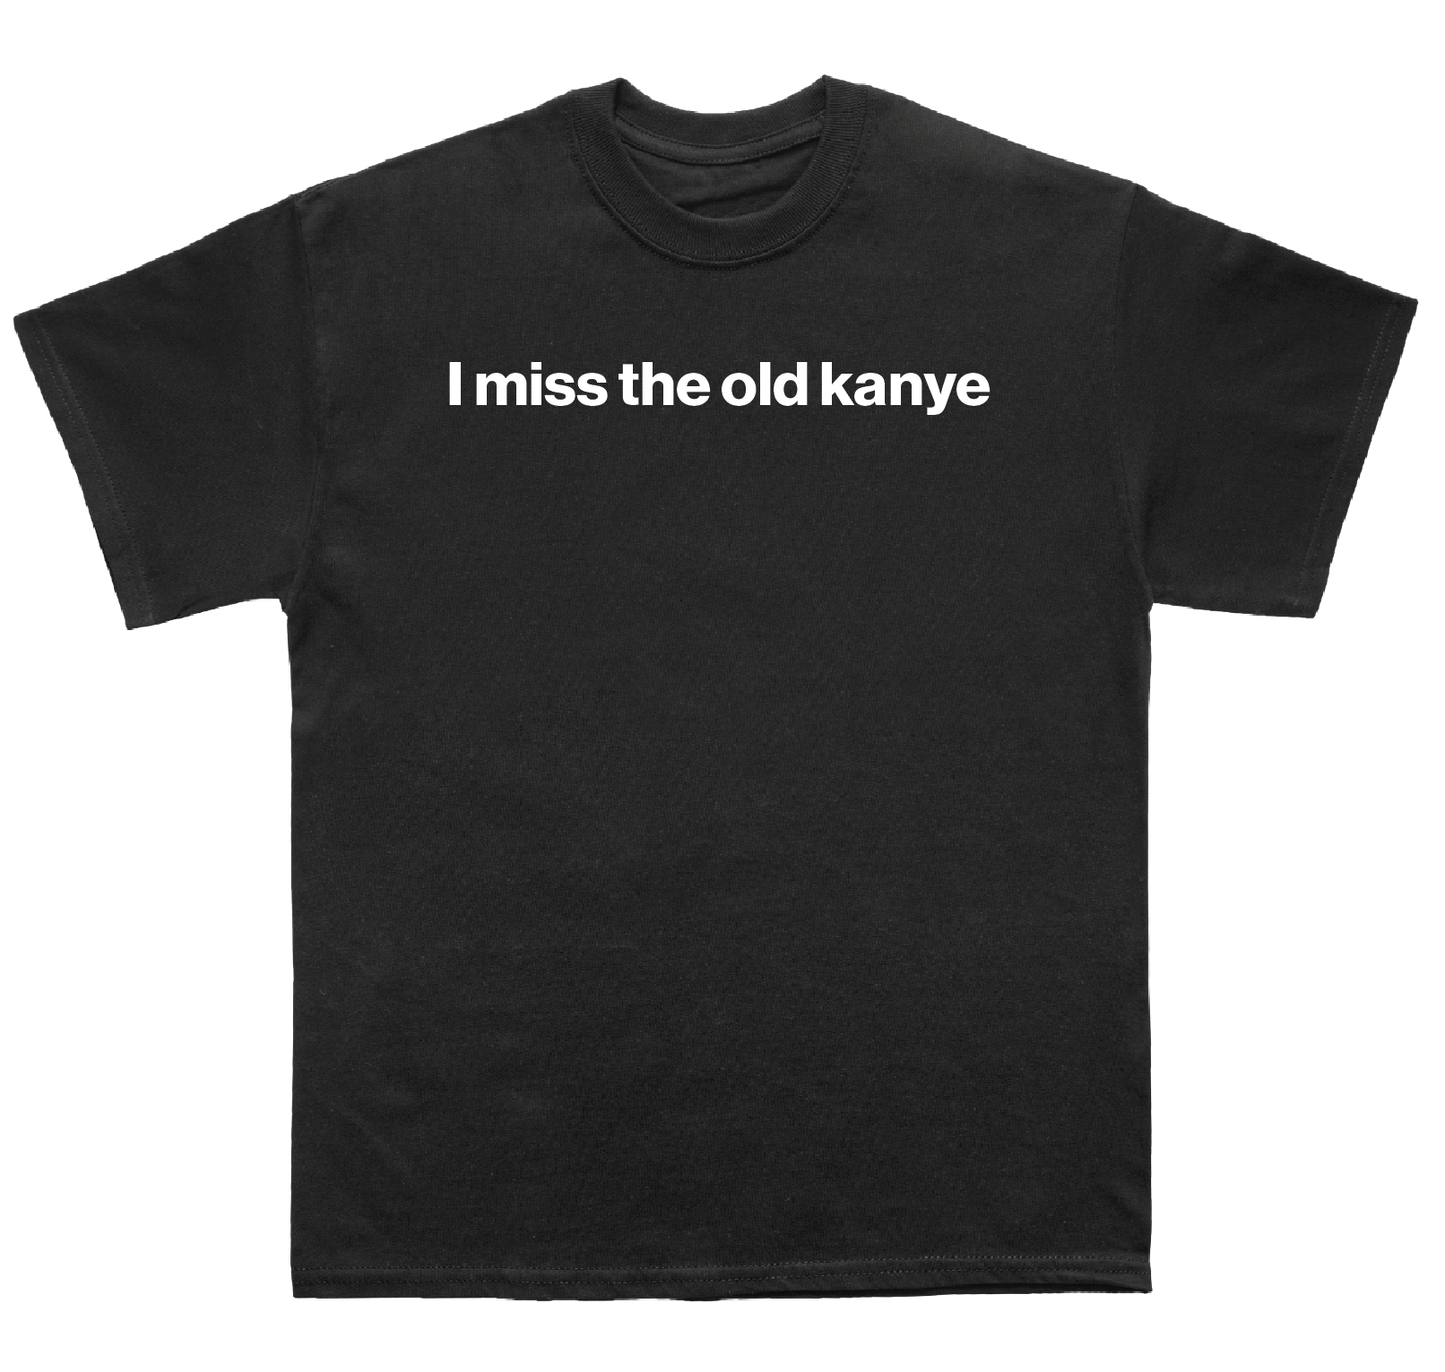 I miss the old kanye shirt